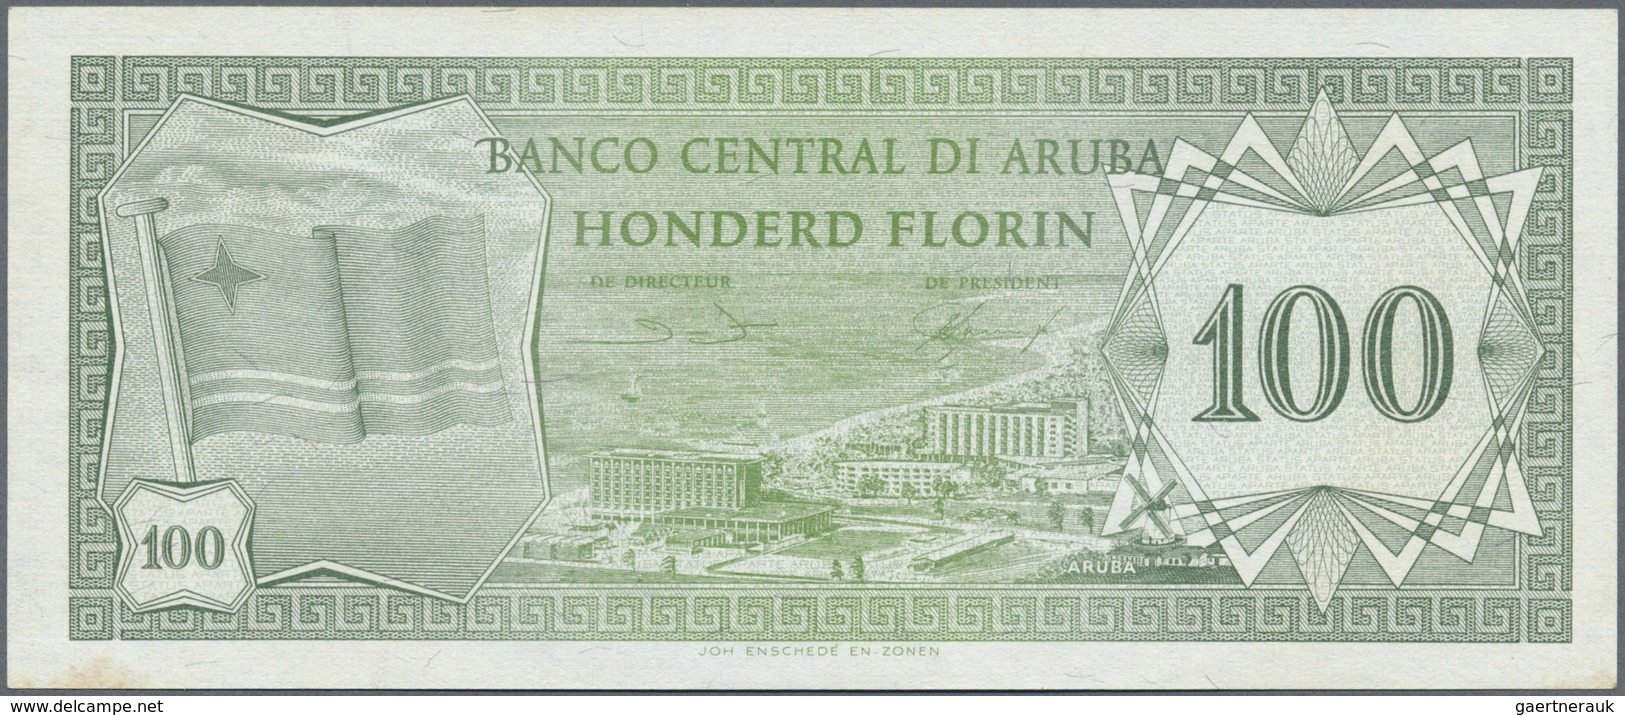 Aruba: Aruba 100 Florin 1986 P. 5, One Minor Stain Trace At Lower Left Corner, Otherwise UNC. - Aruba (1986-...)